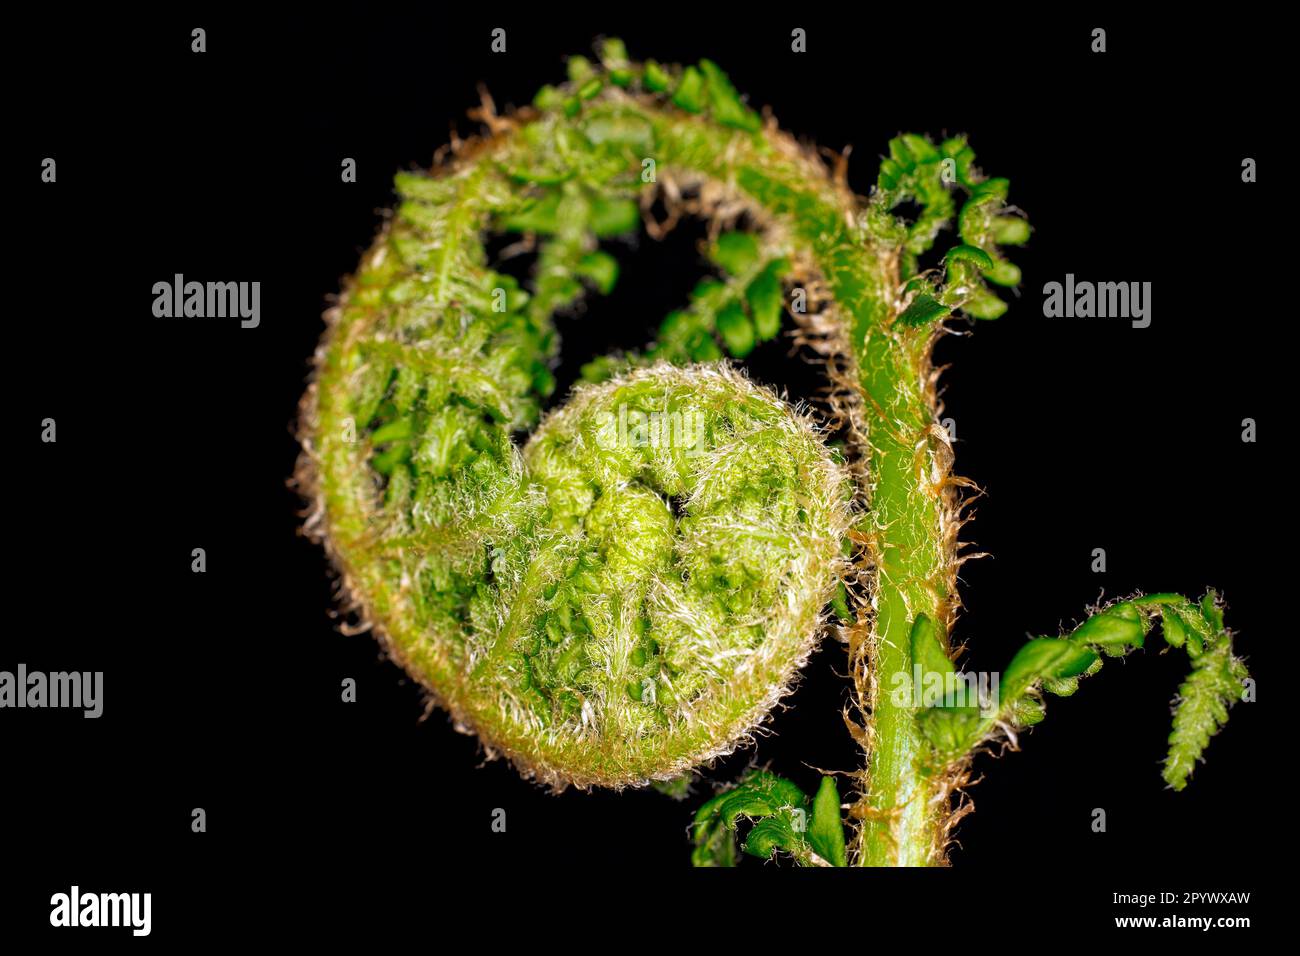 Still curled up, male-fern (Dryopteris filix-mas) (synonym: Aspidium filix-mas), Tegeler Forst, Berlin, Germany Stock Photo